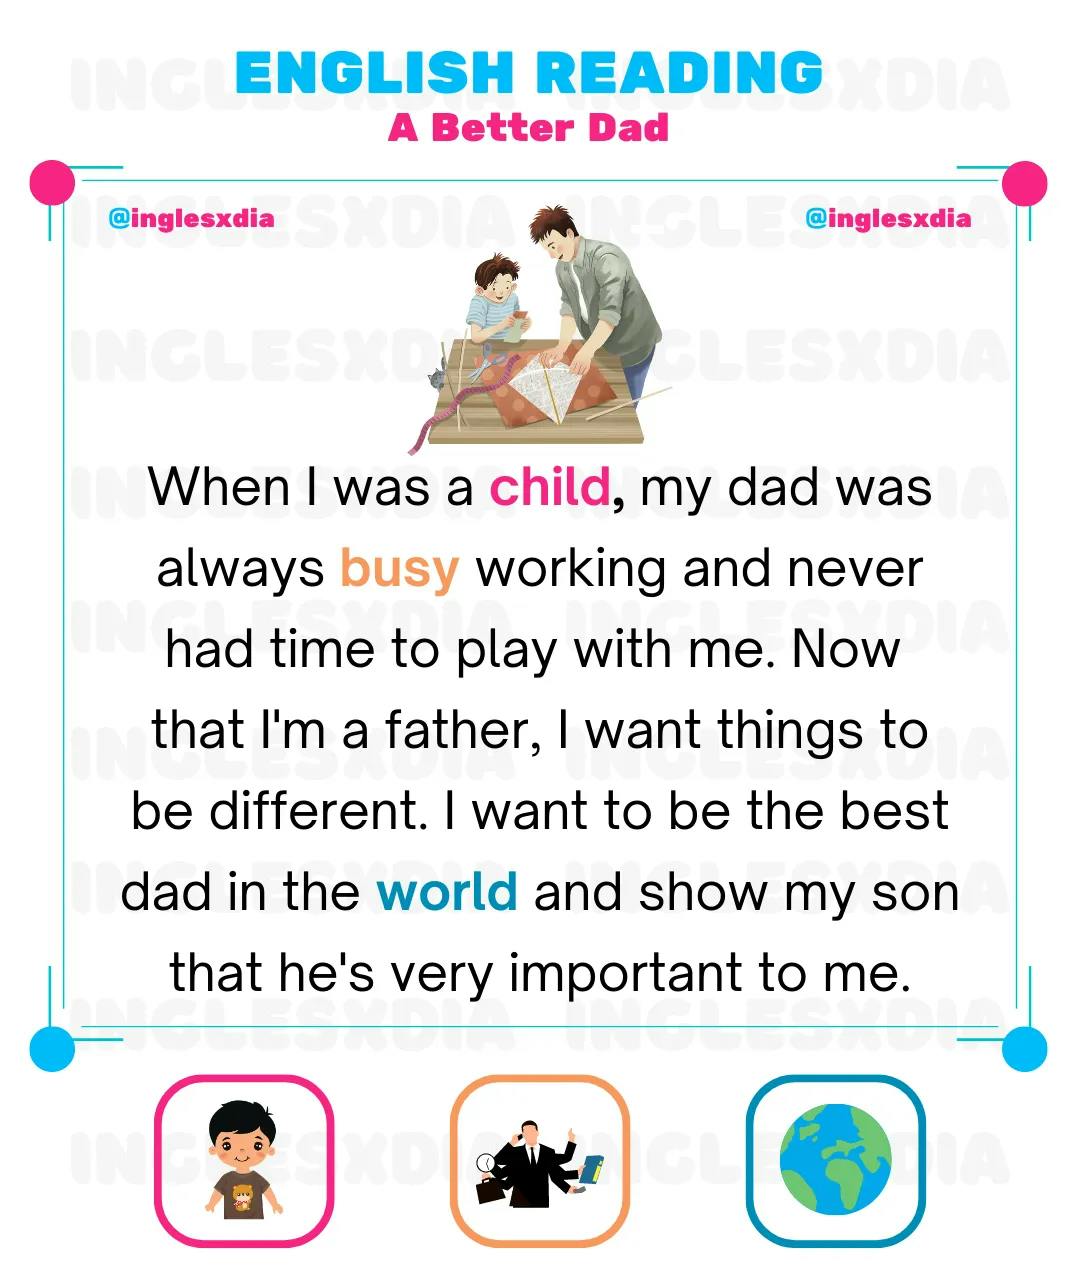 A Better Dad